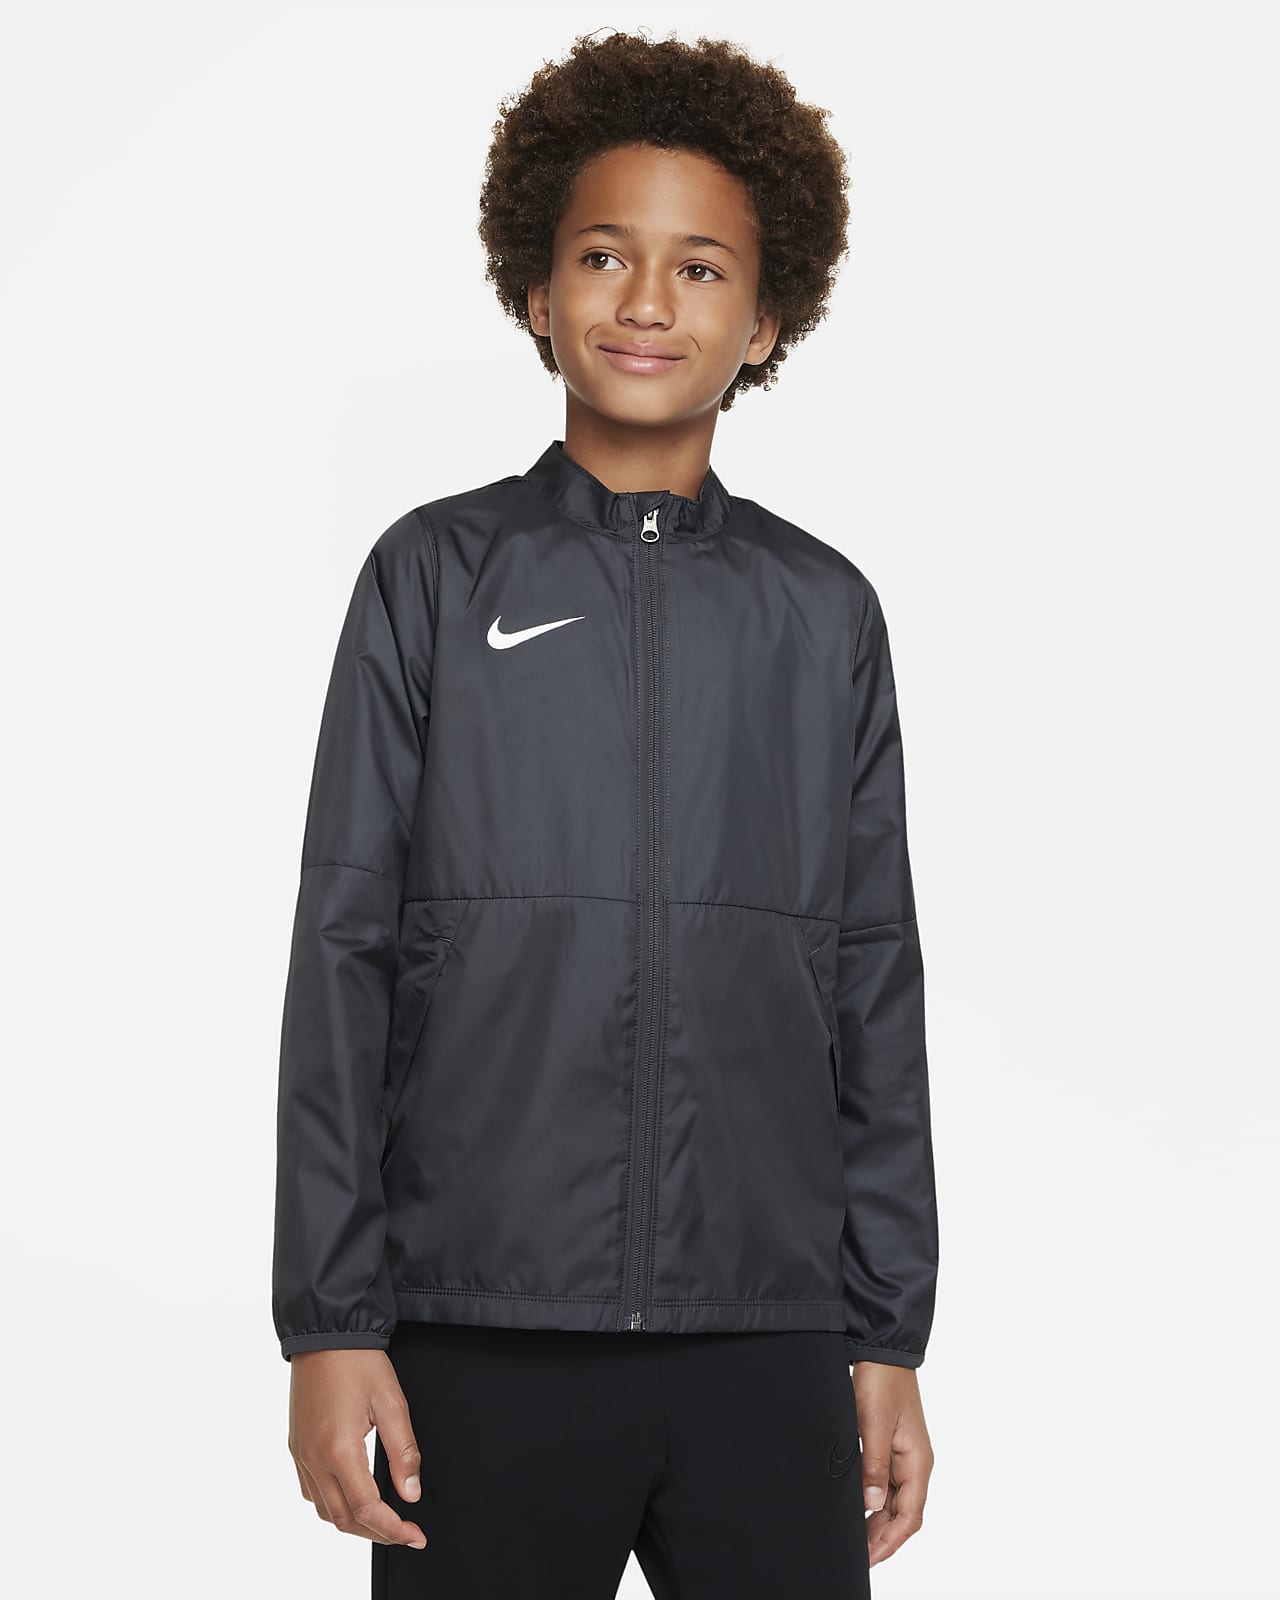 Nike Repel Park20 Kids' Soccer Jacket